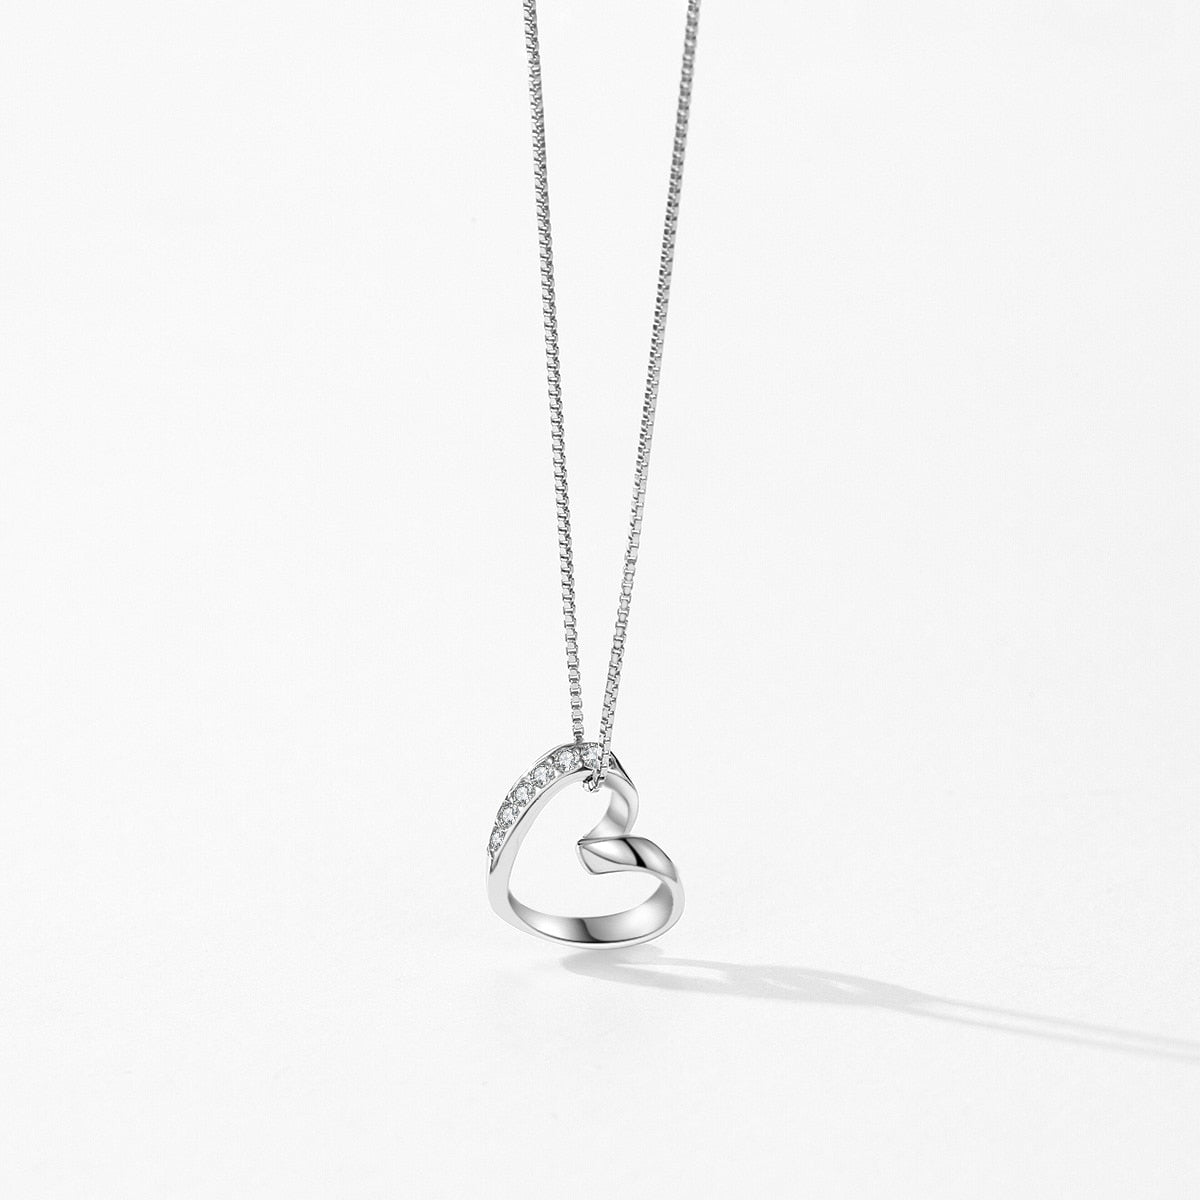 Silver Romantic Heart Necklace